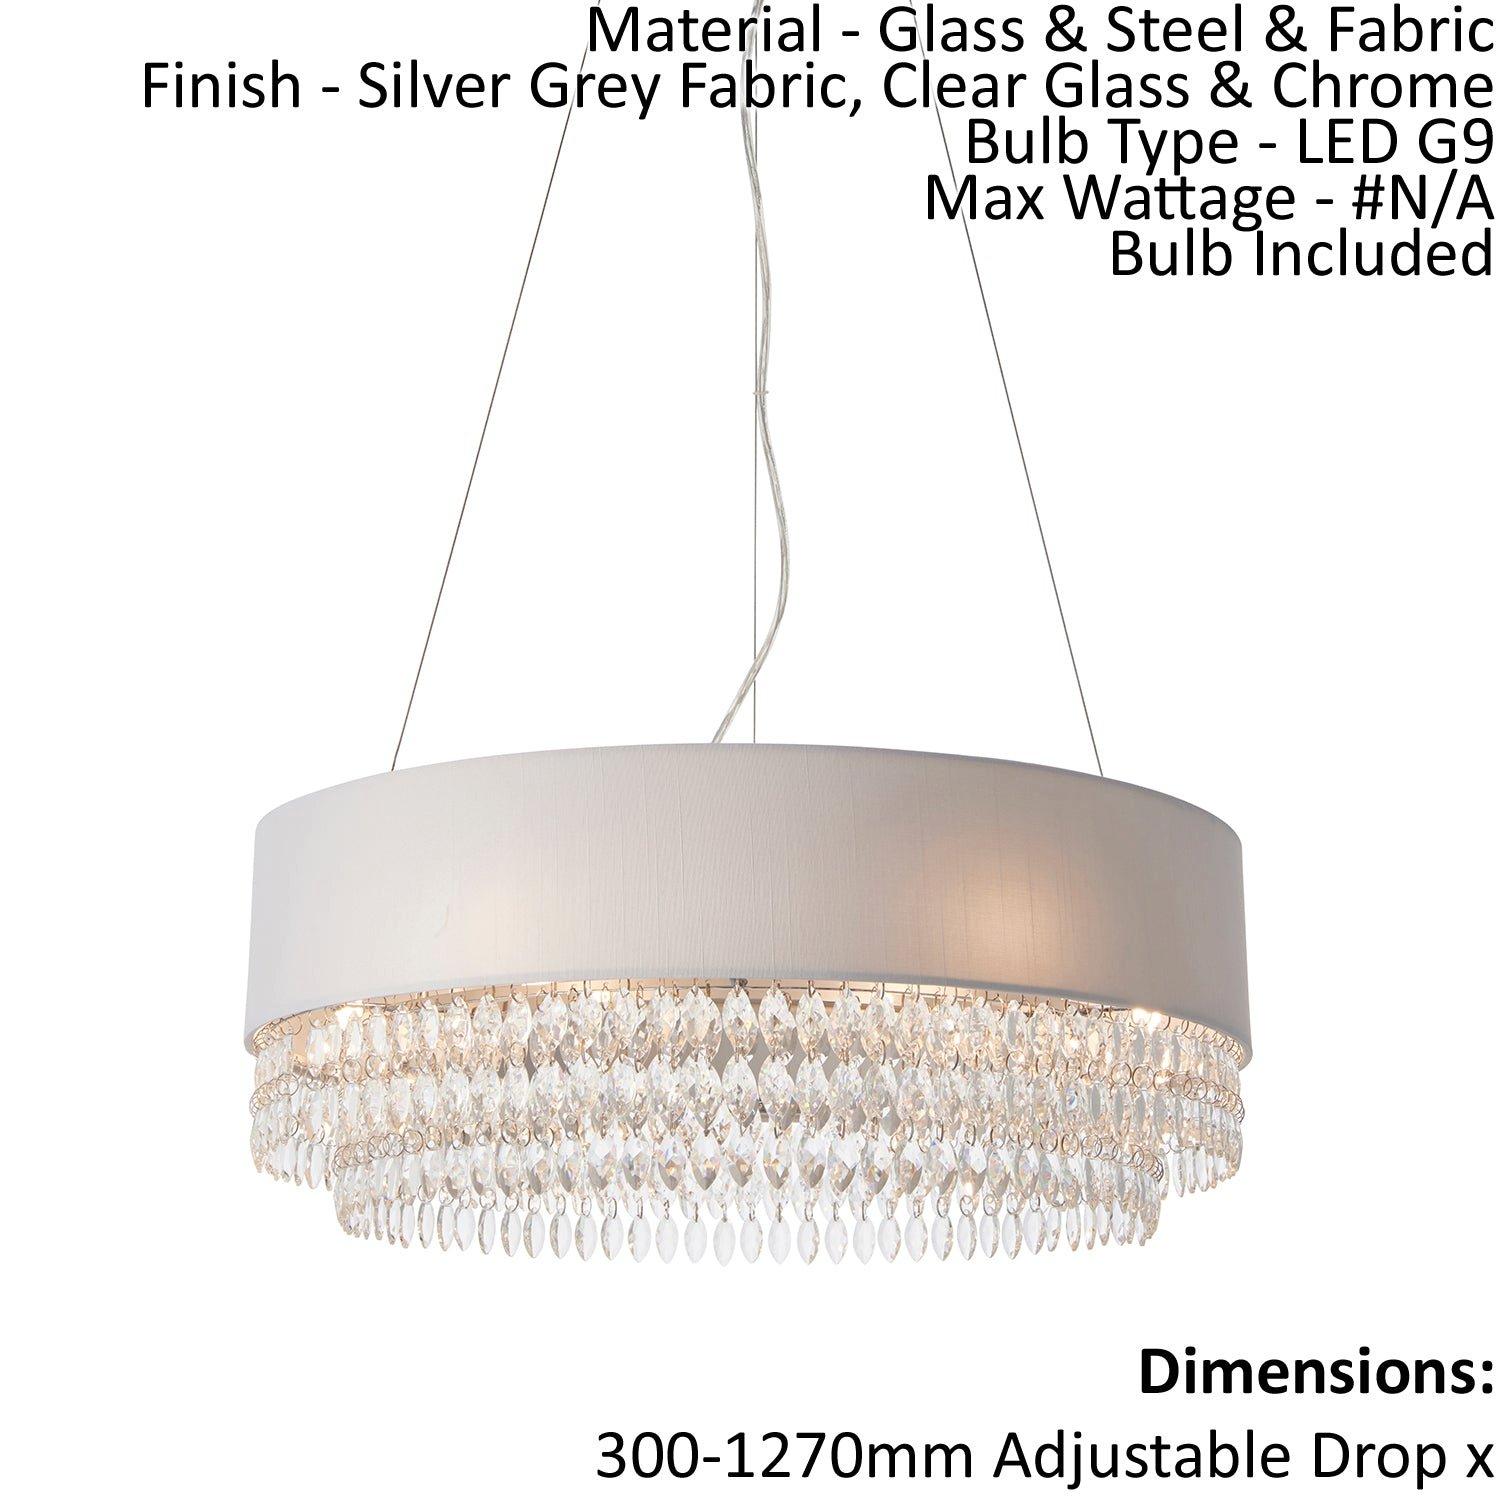 Ceiling Pendant Light - Silver Grey Fabric / Clear Glass & Chrome - 6x2.5W G9